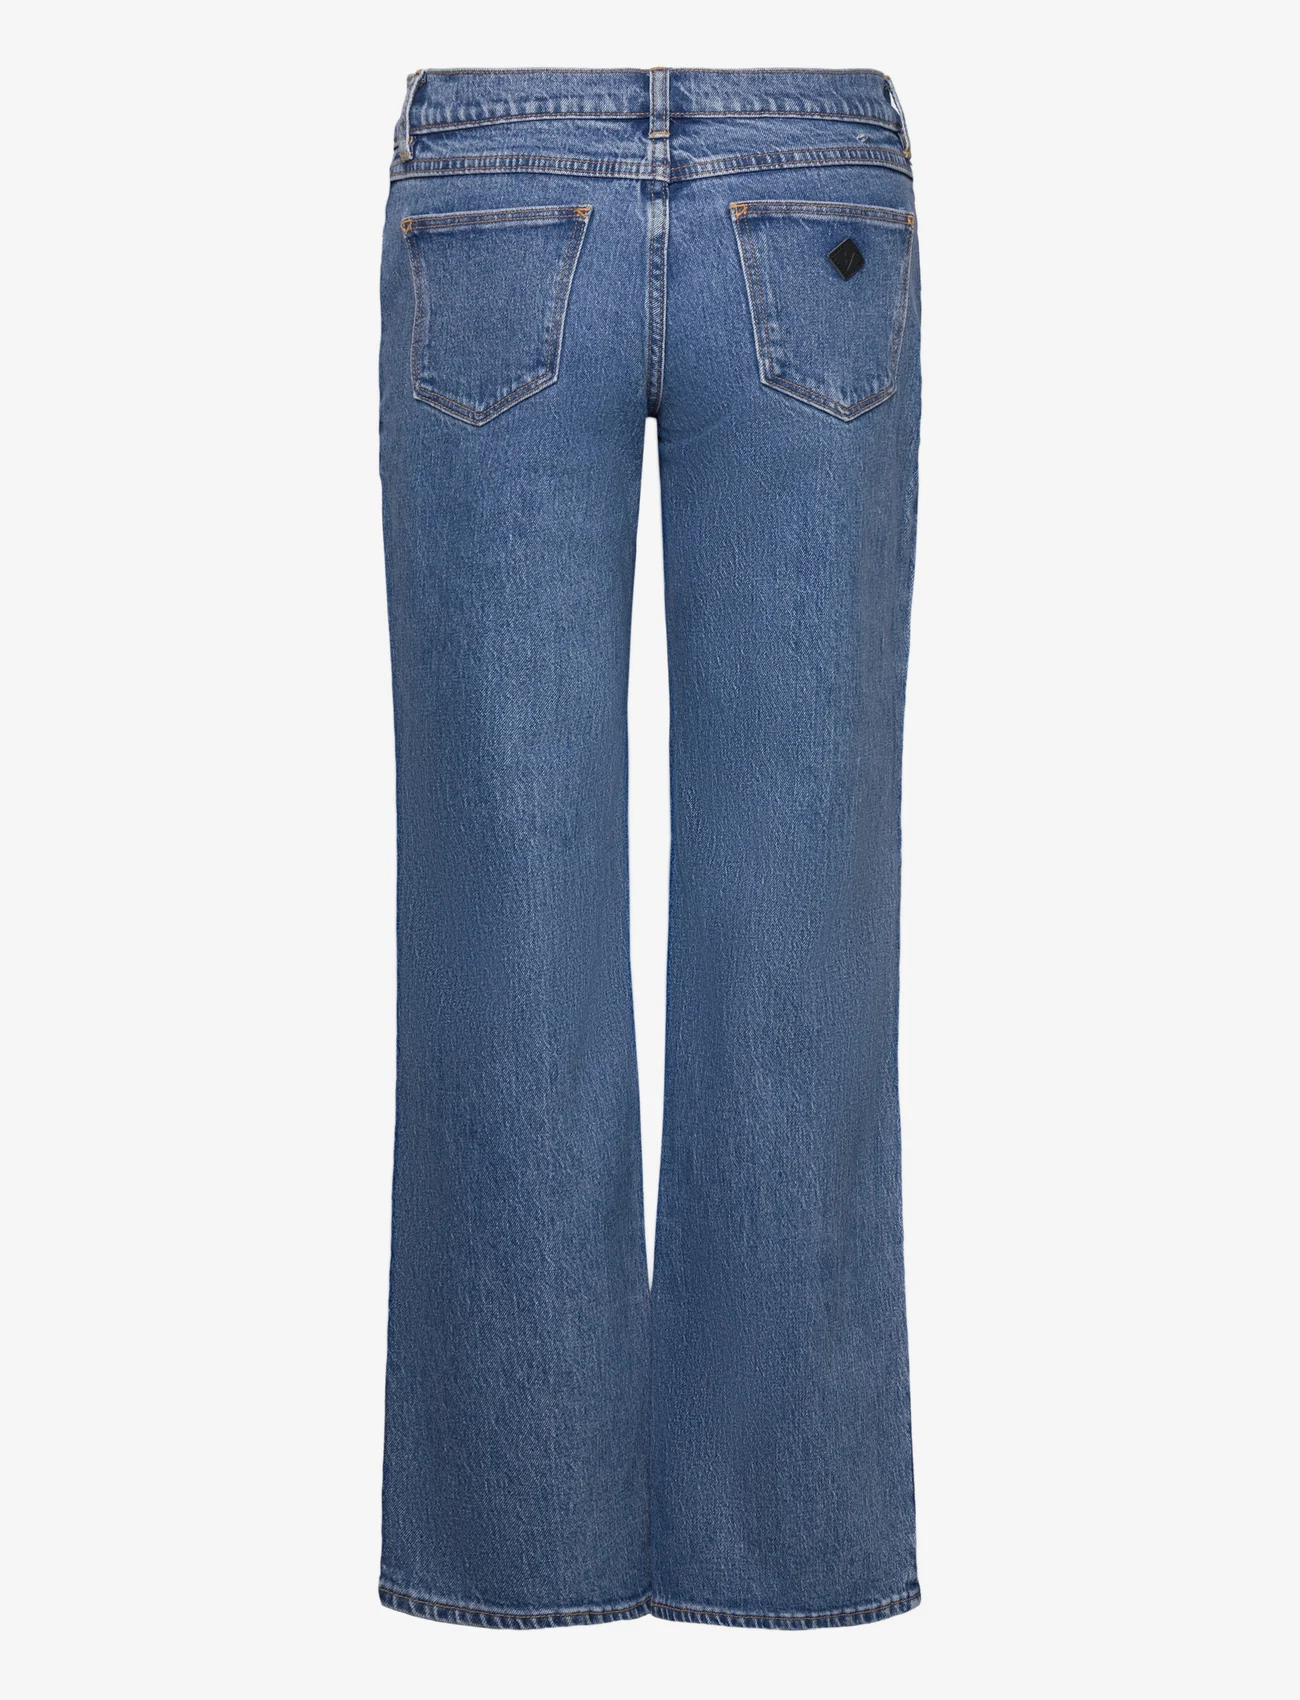 ABRAND - A 99 LOW & WIDE DENISE - vida jeans - blue - 1